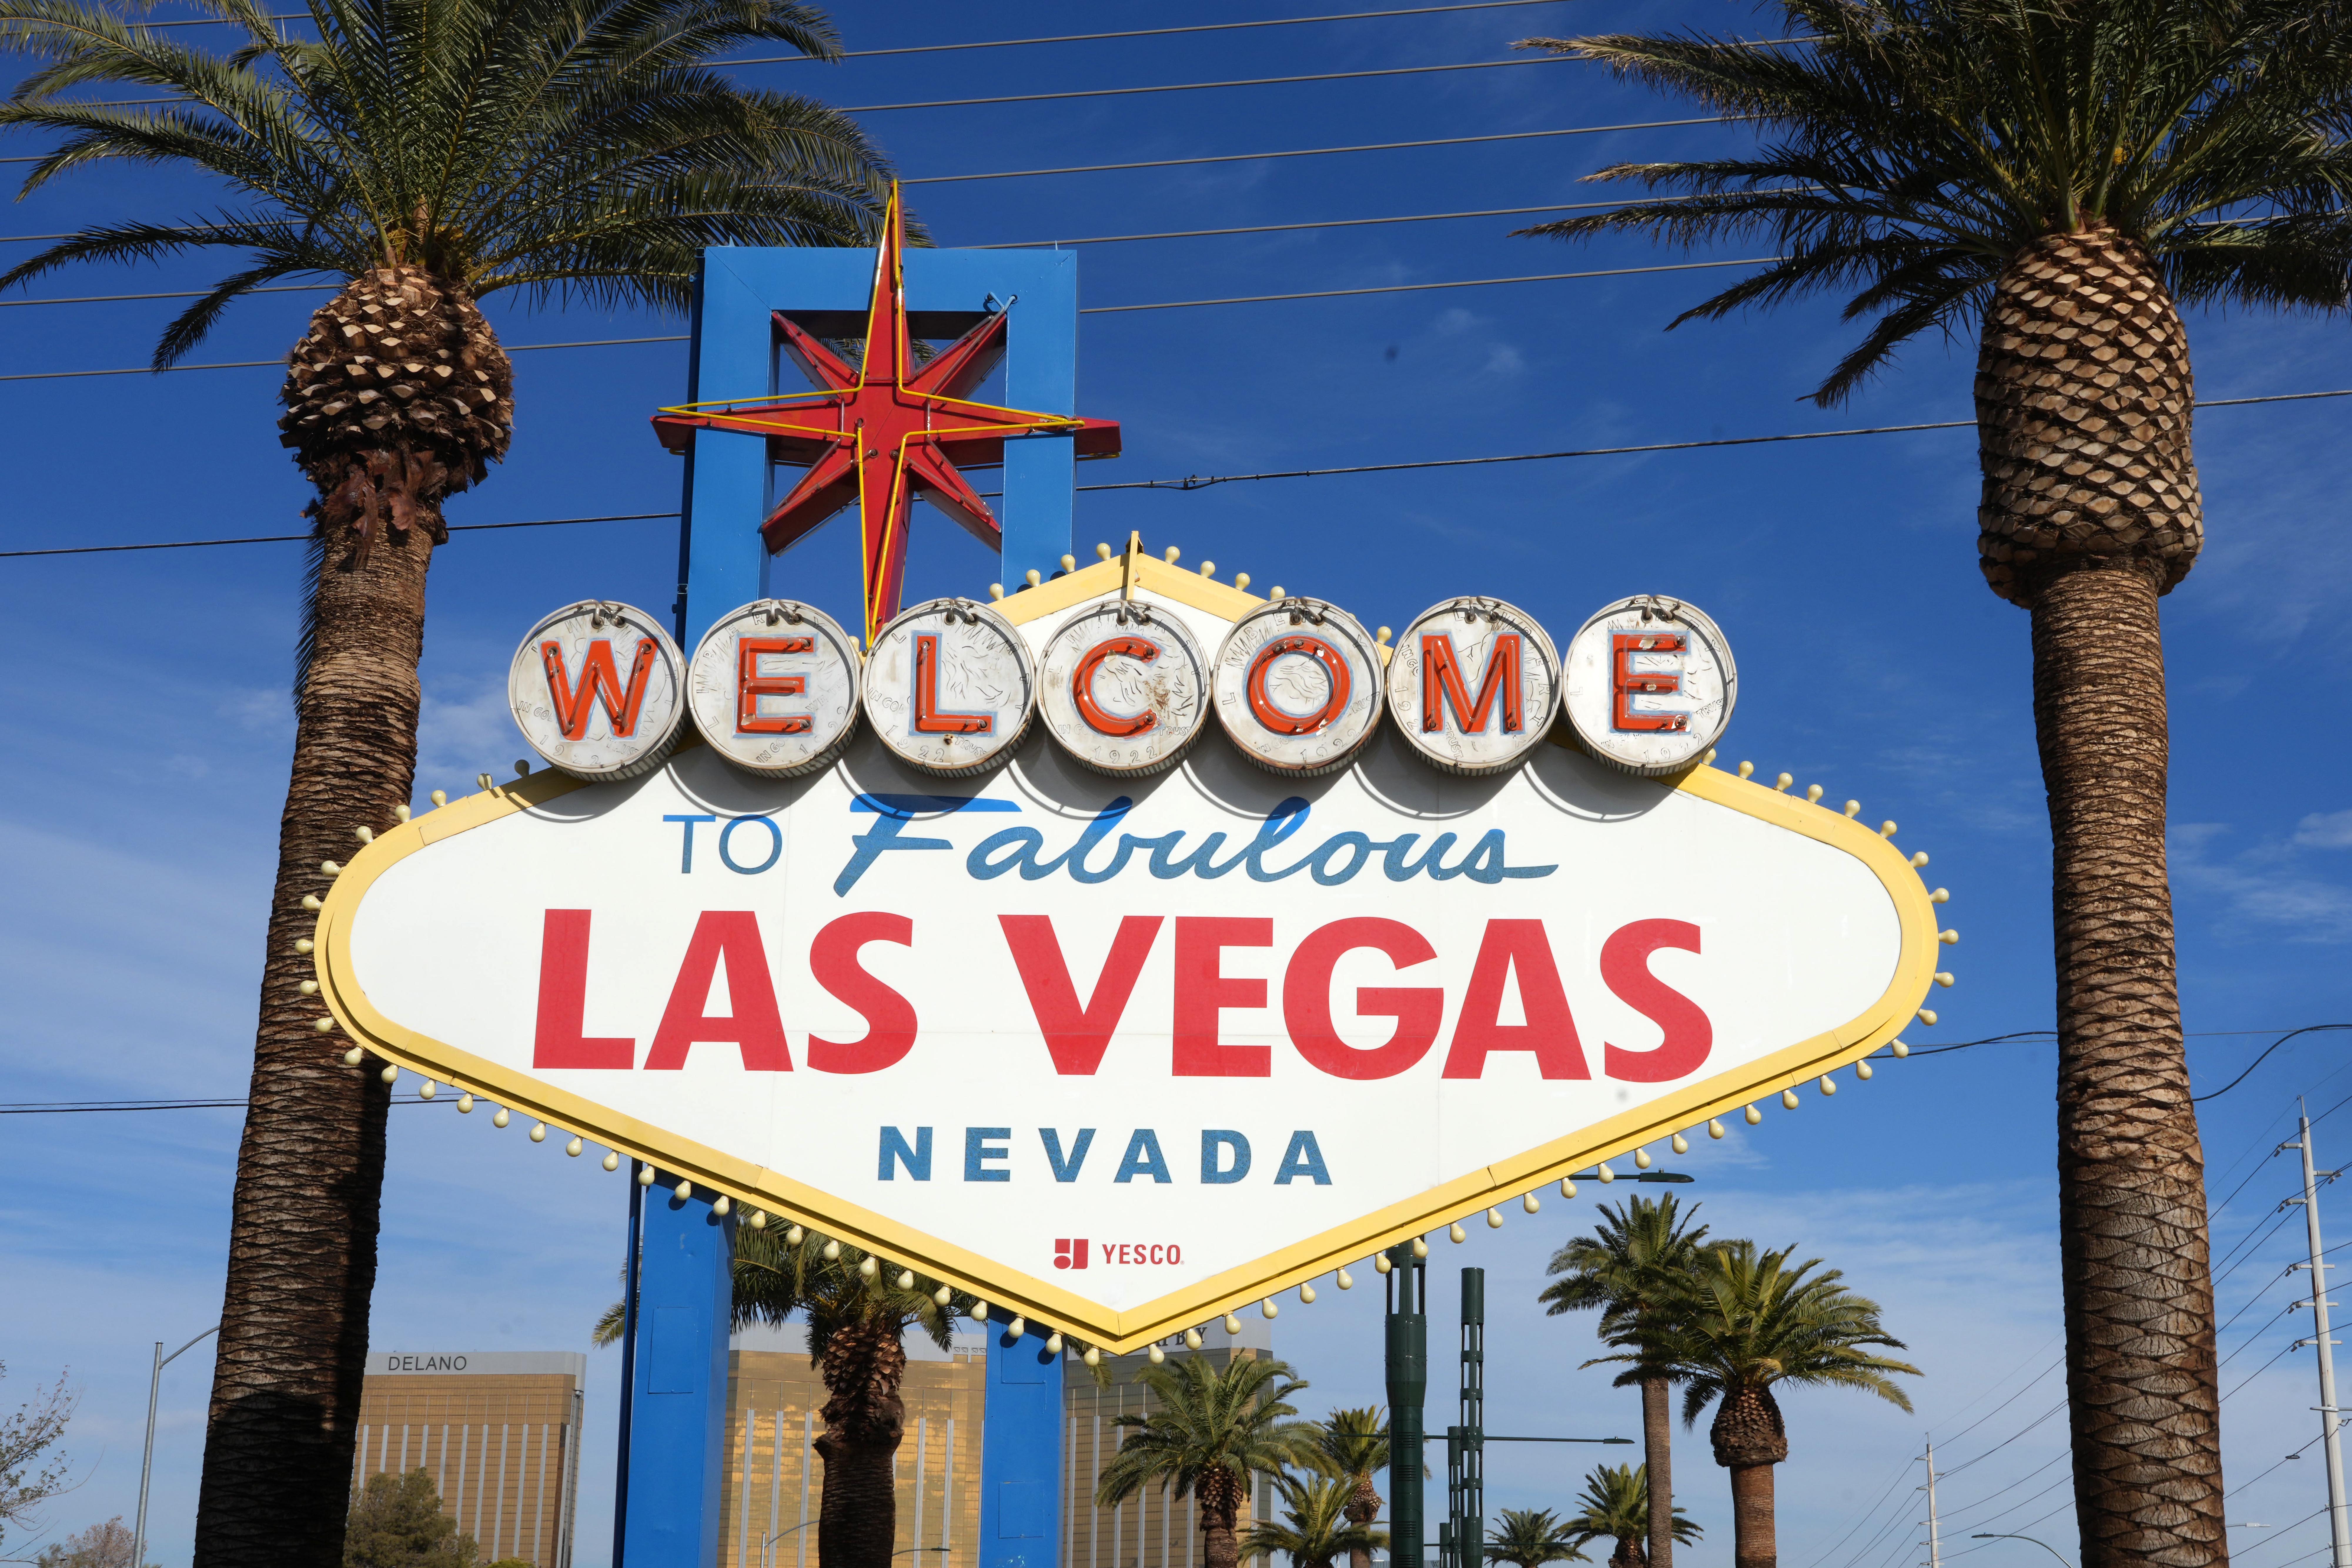 To fabulous Las Vegas Nevada Vegas Golden Knights and Las Vegas